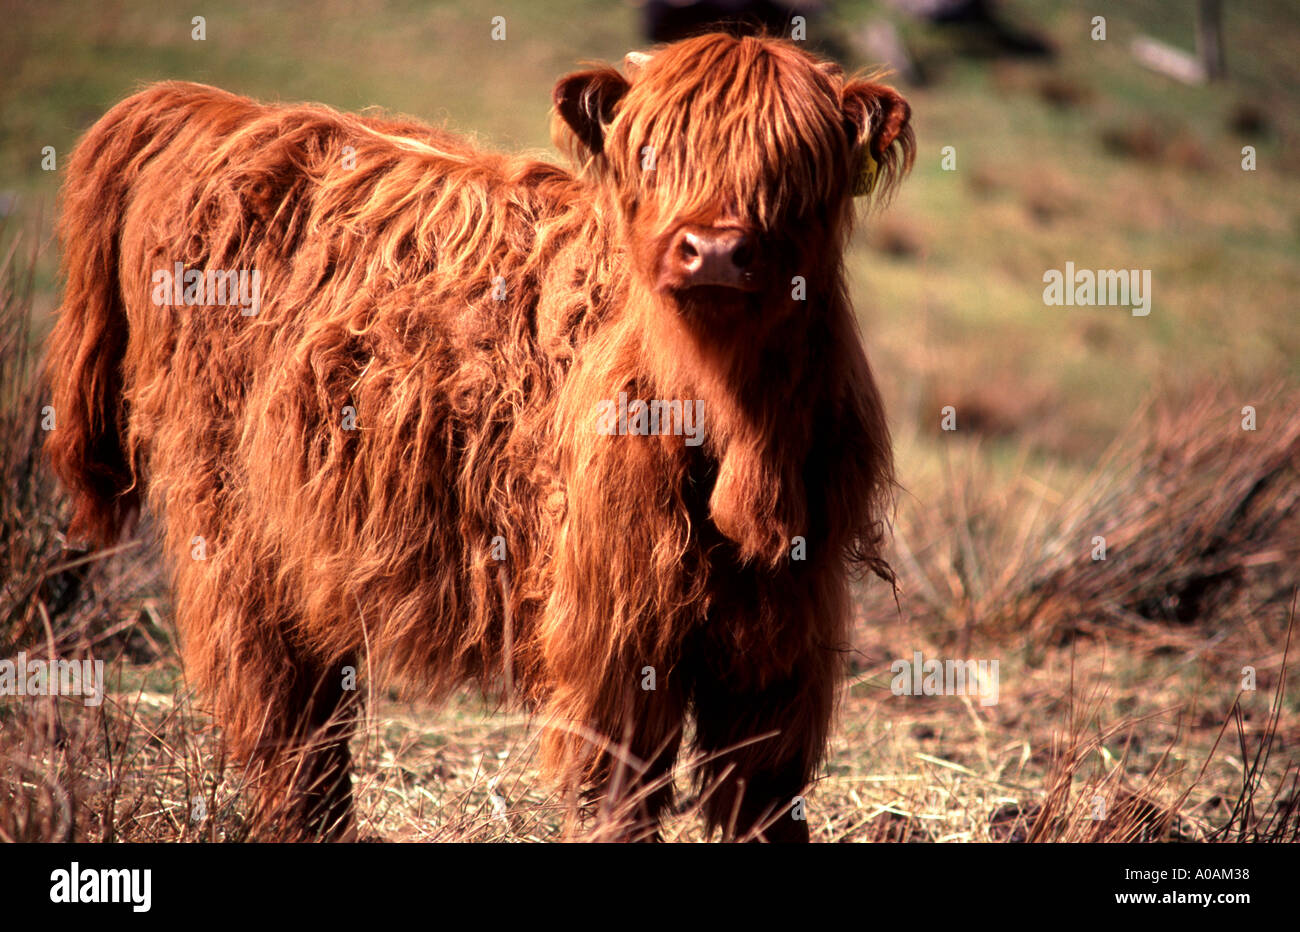 Young Highland calf looking at camera scruffy coat and hair covering eyes Stock Photo